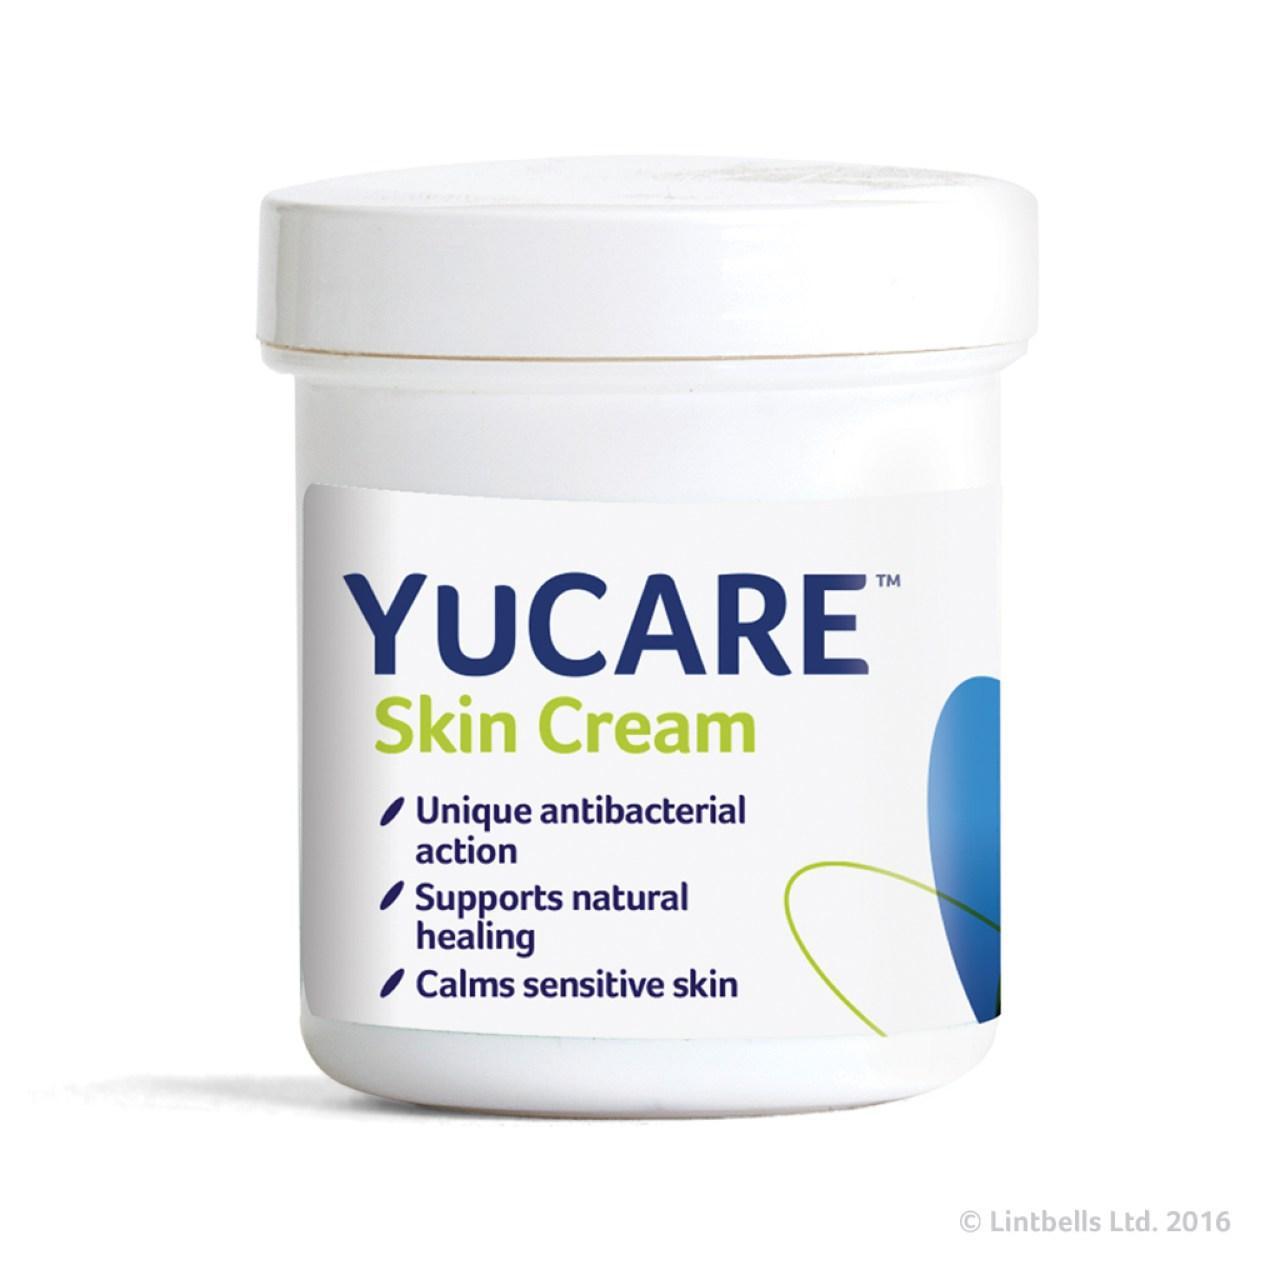 An image of Yucare Skin Cream